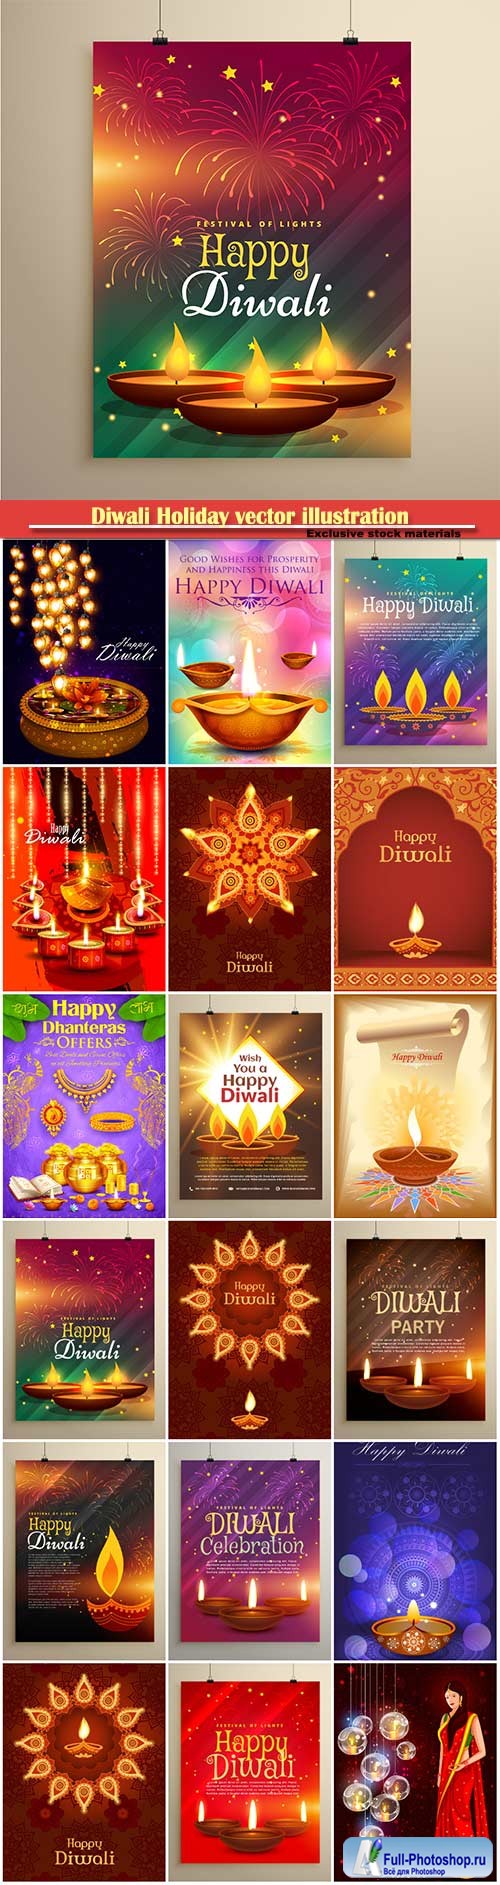 Diwali Holiday vector illustration with burning diya # 4